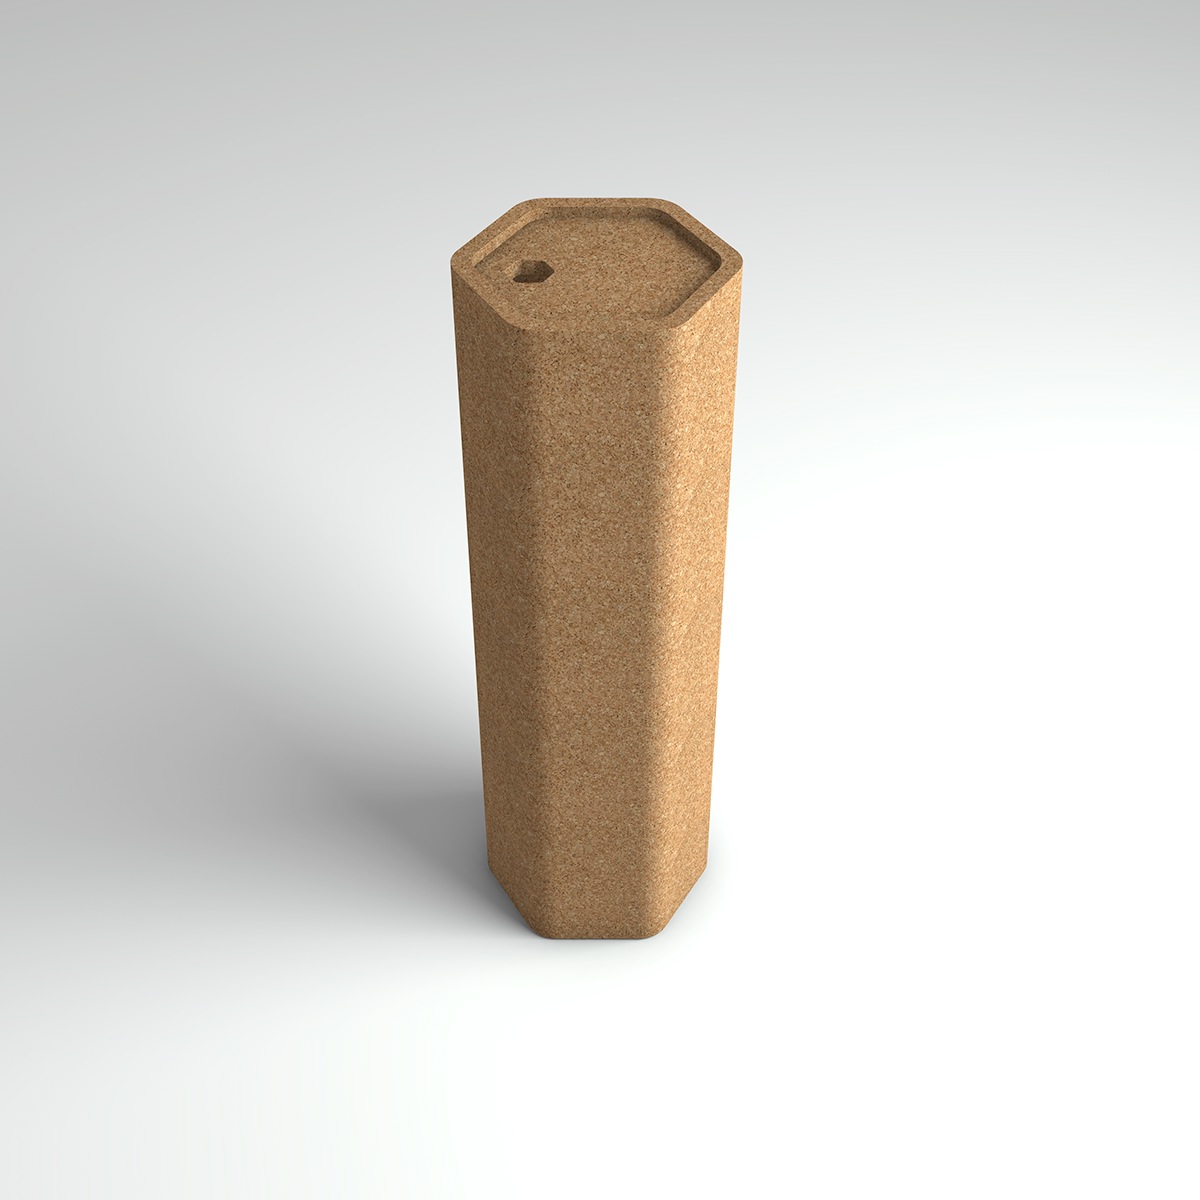 cork sustainable material Portugal sustainable product design wine Multipurpose